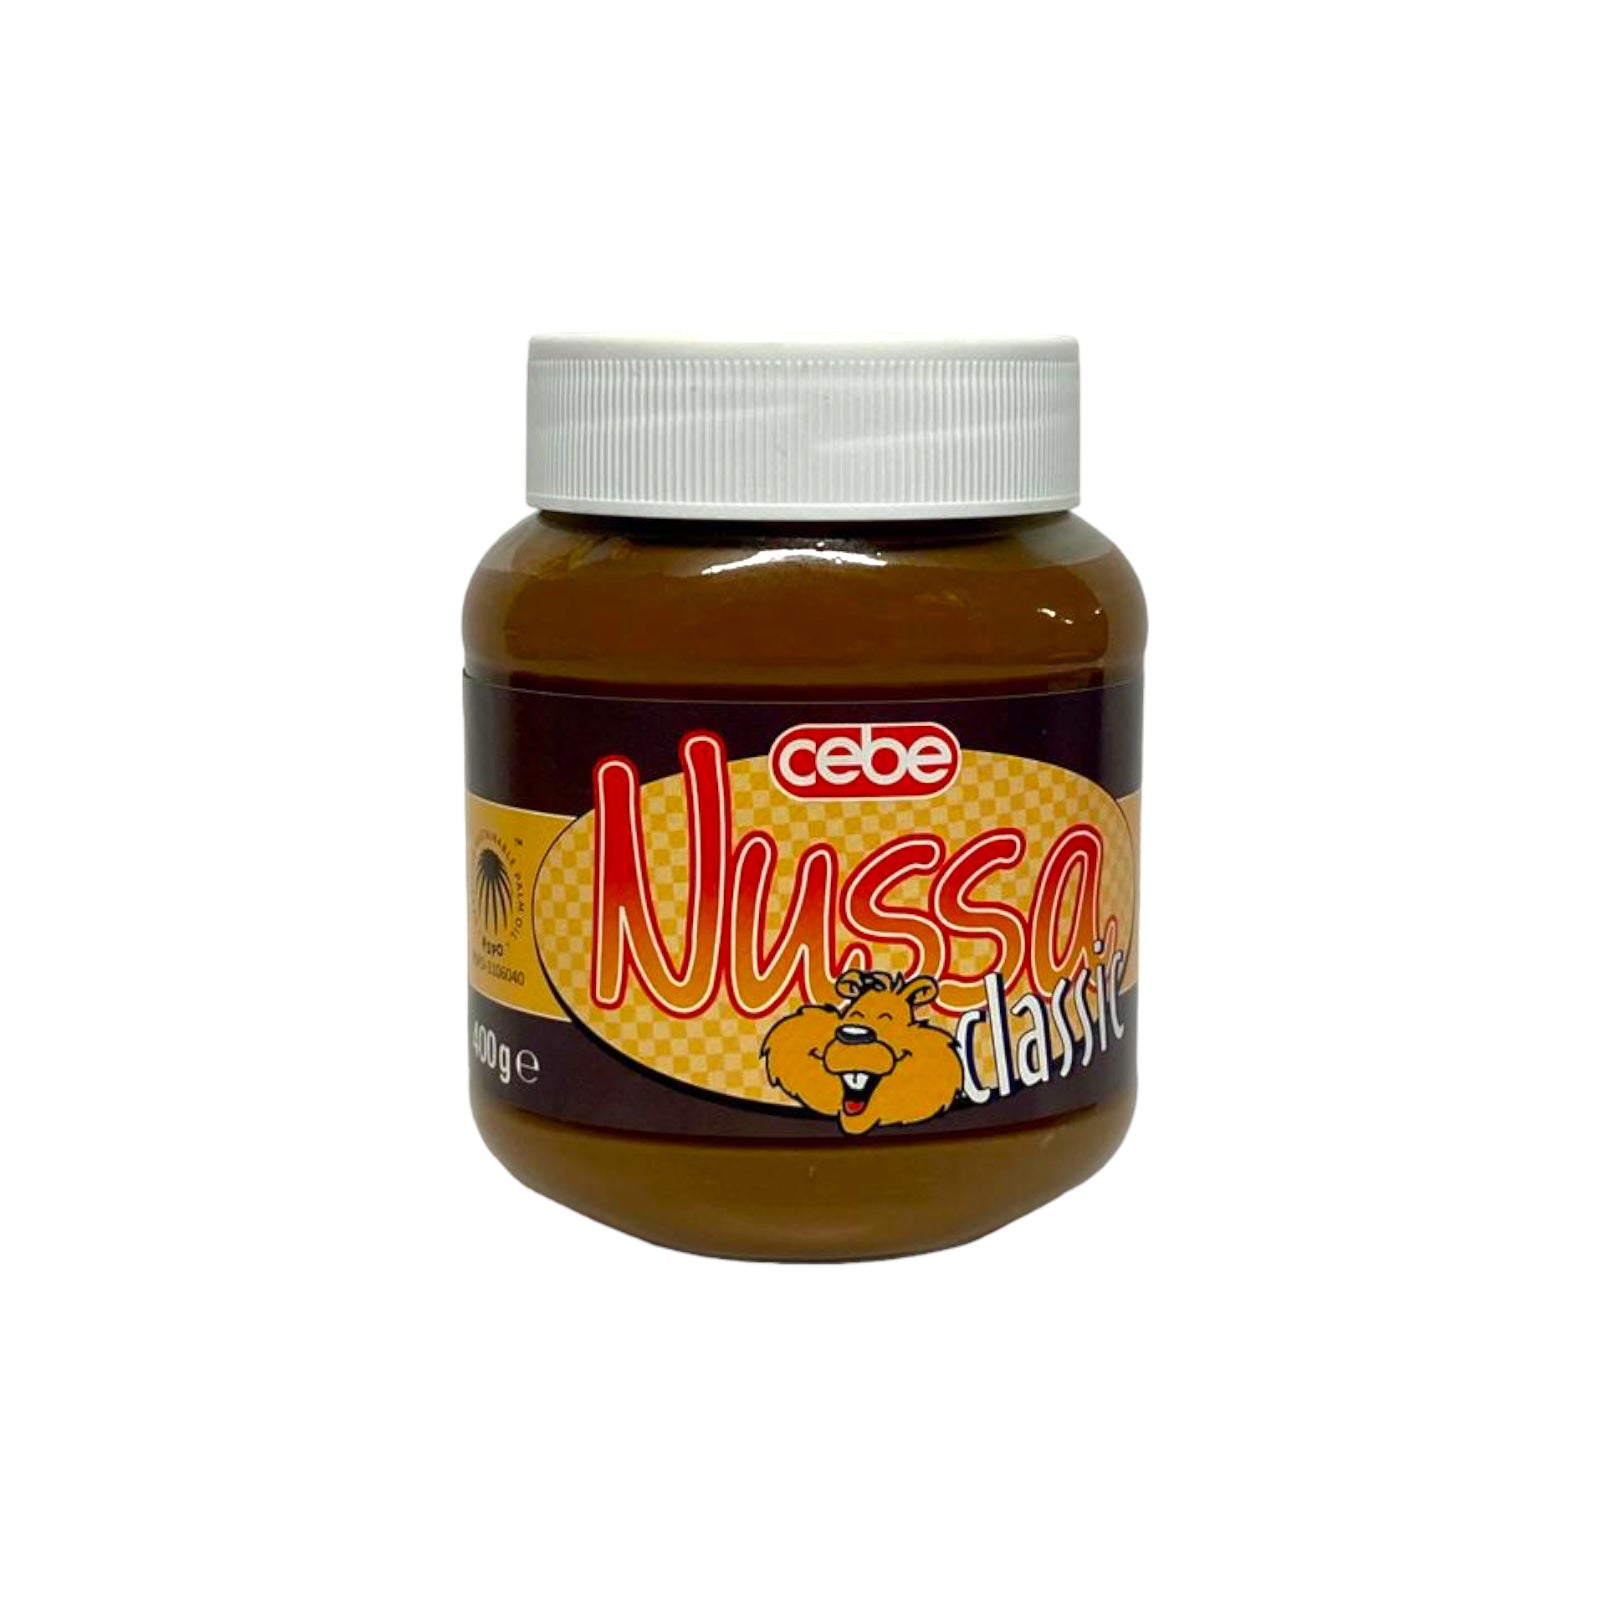 Nussa Classic Chocolate Hazelnut Spread 400g